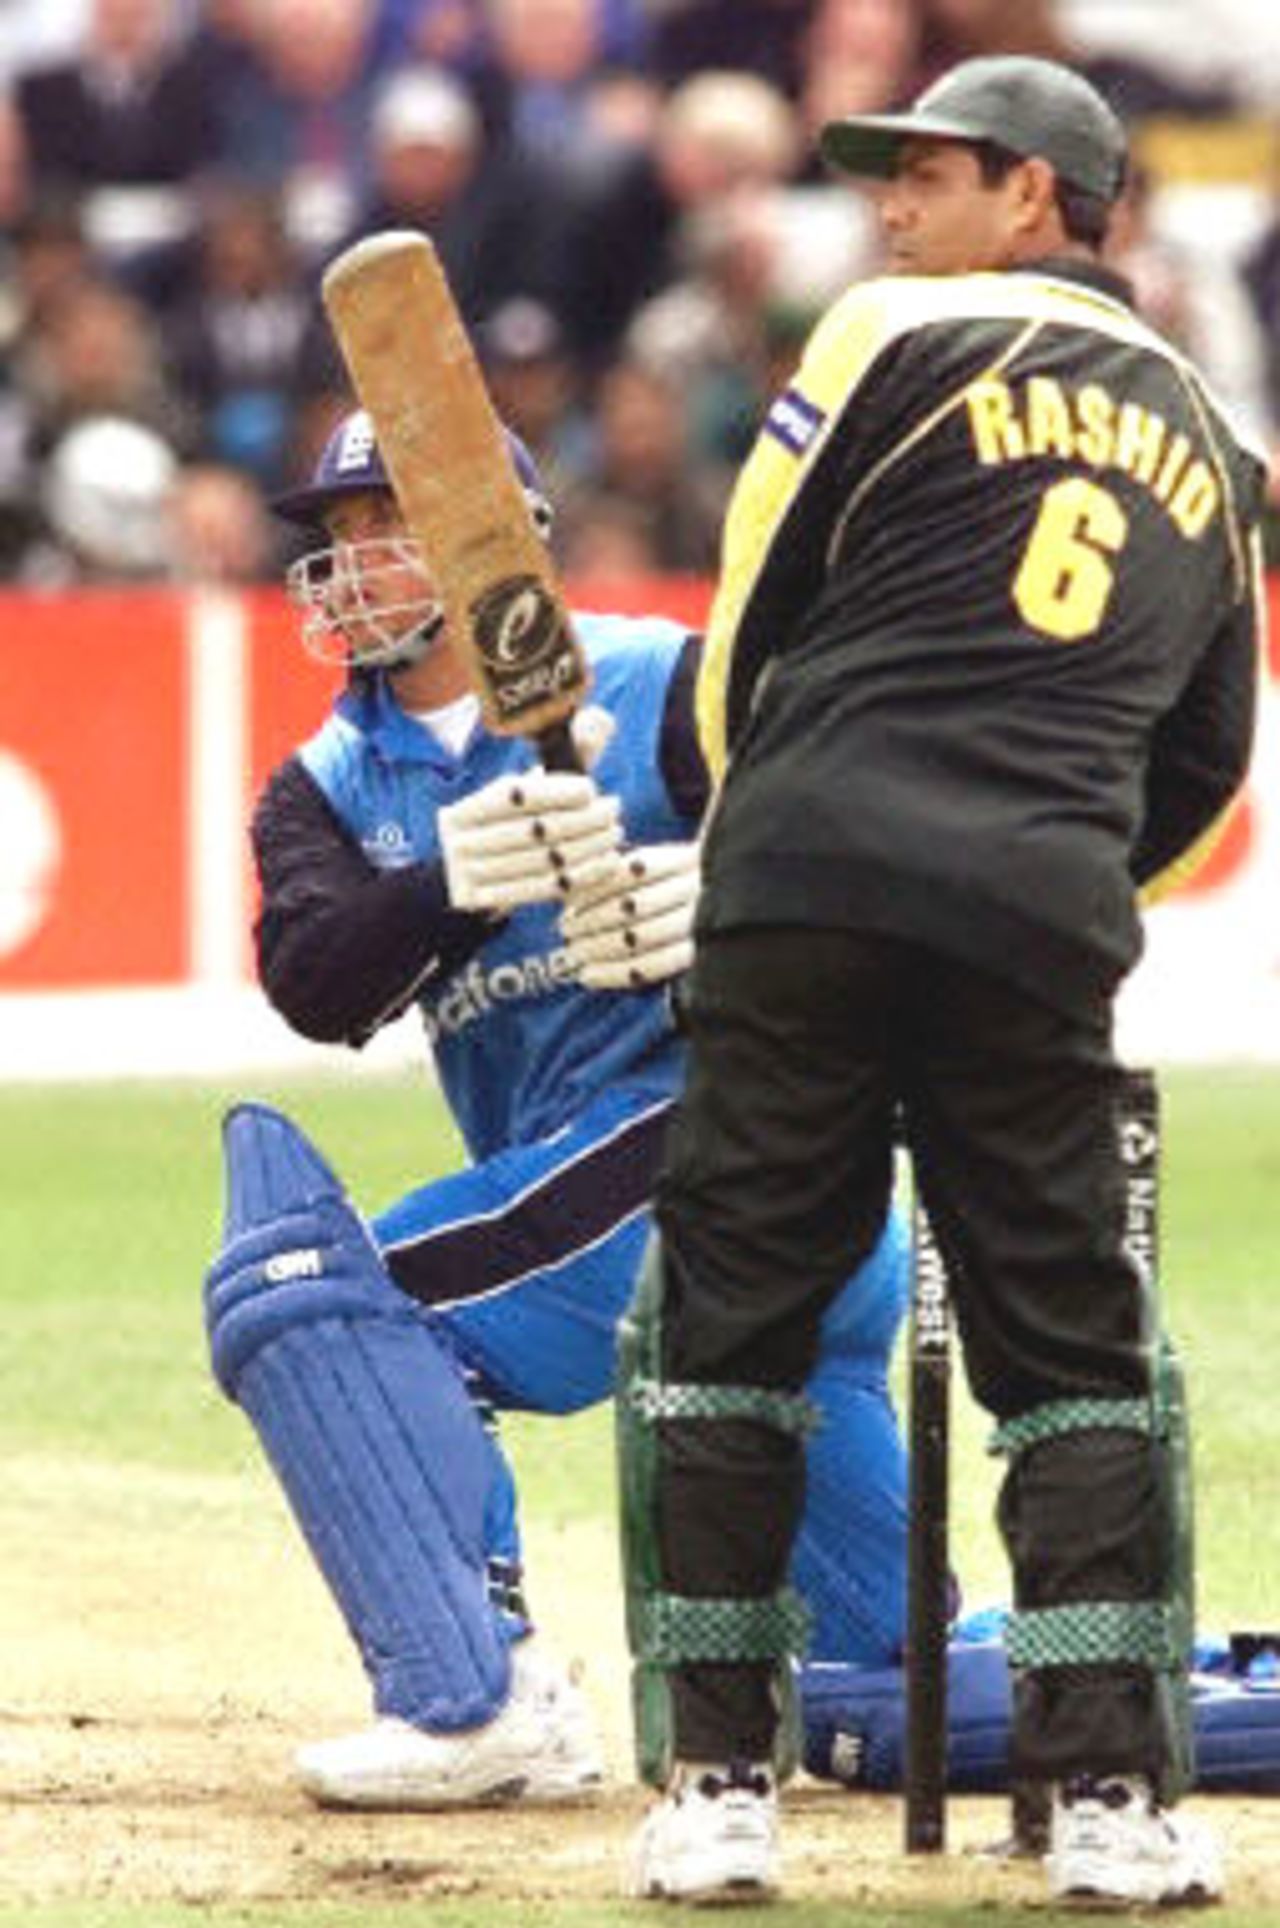 Darren Gough sweeps a ball while batting, 7th ODI at Headingley, 17 June 2001.